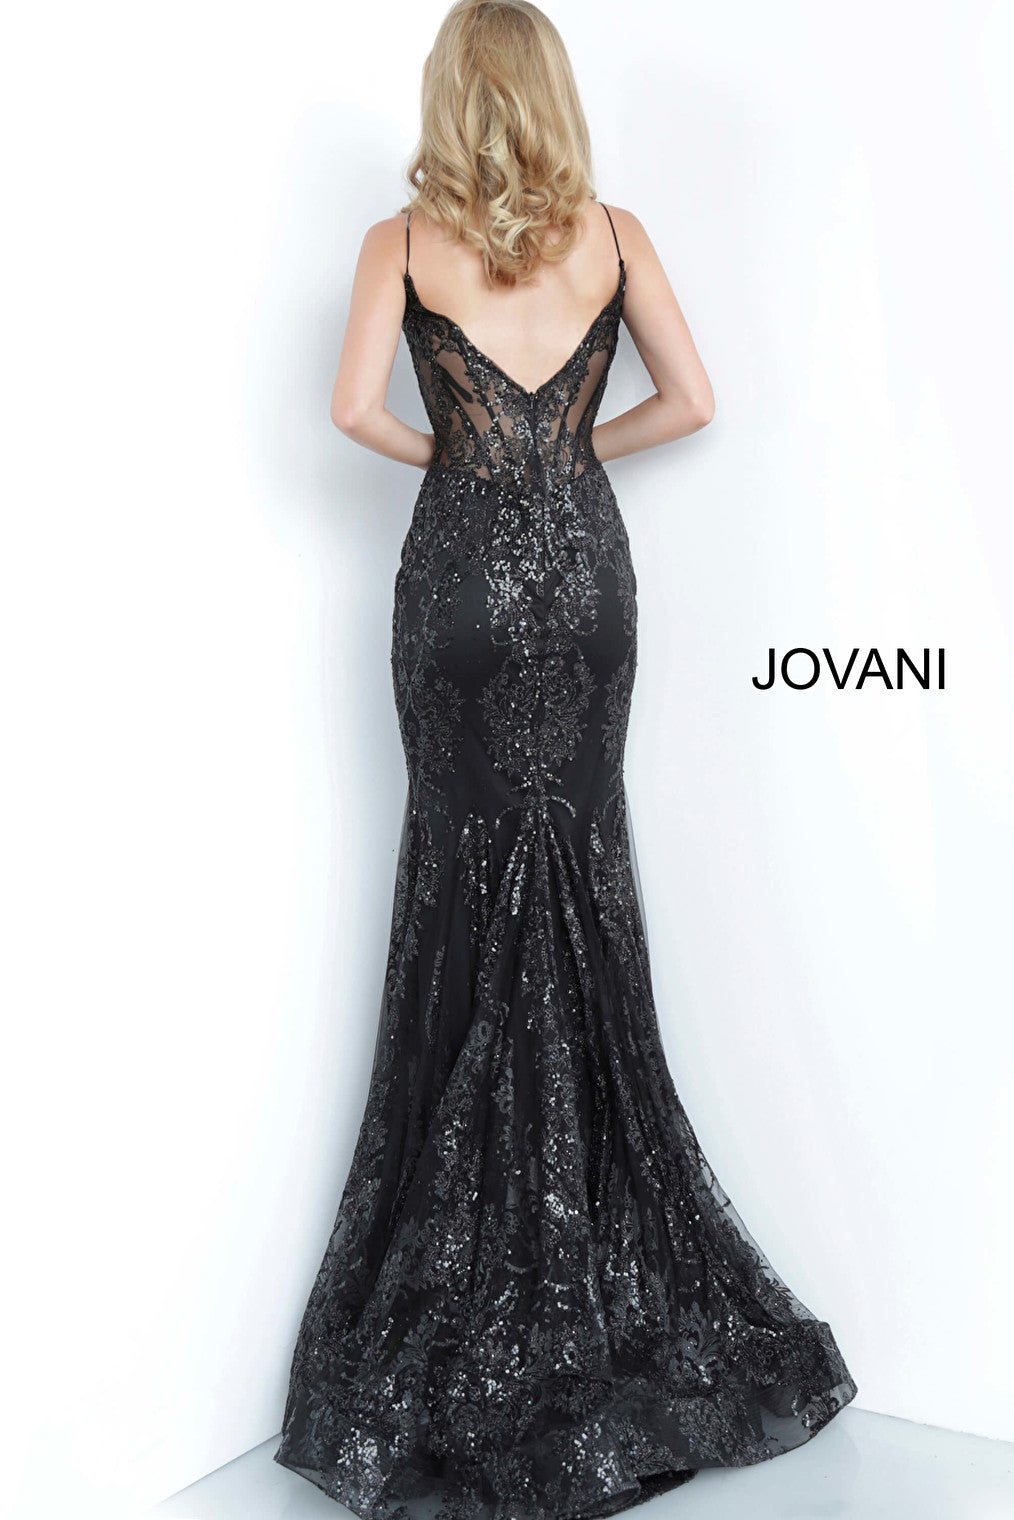 Jovani 04585 Lace V Neck Mermaid Evening Dress